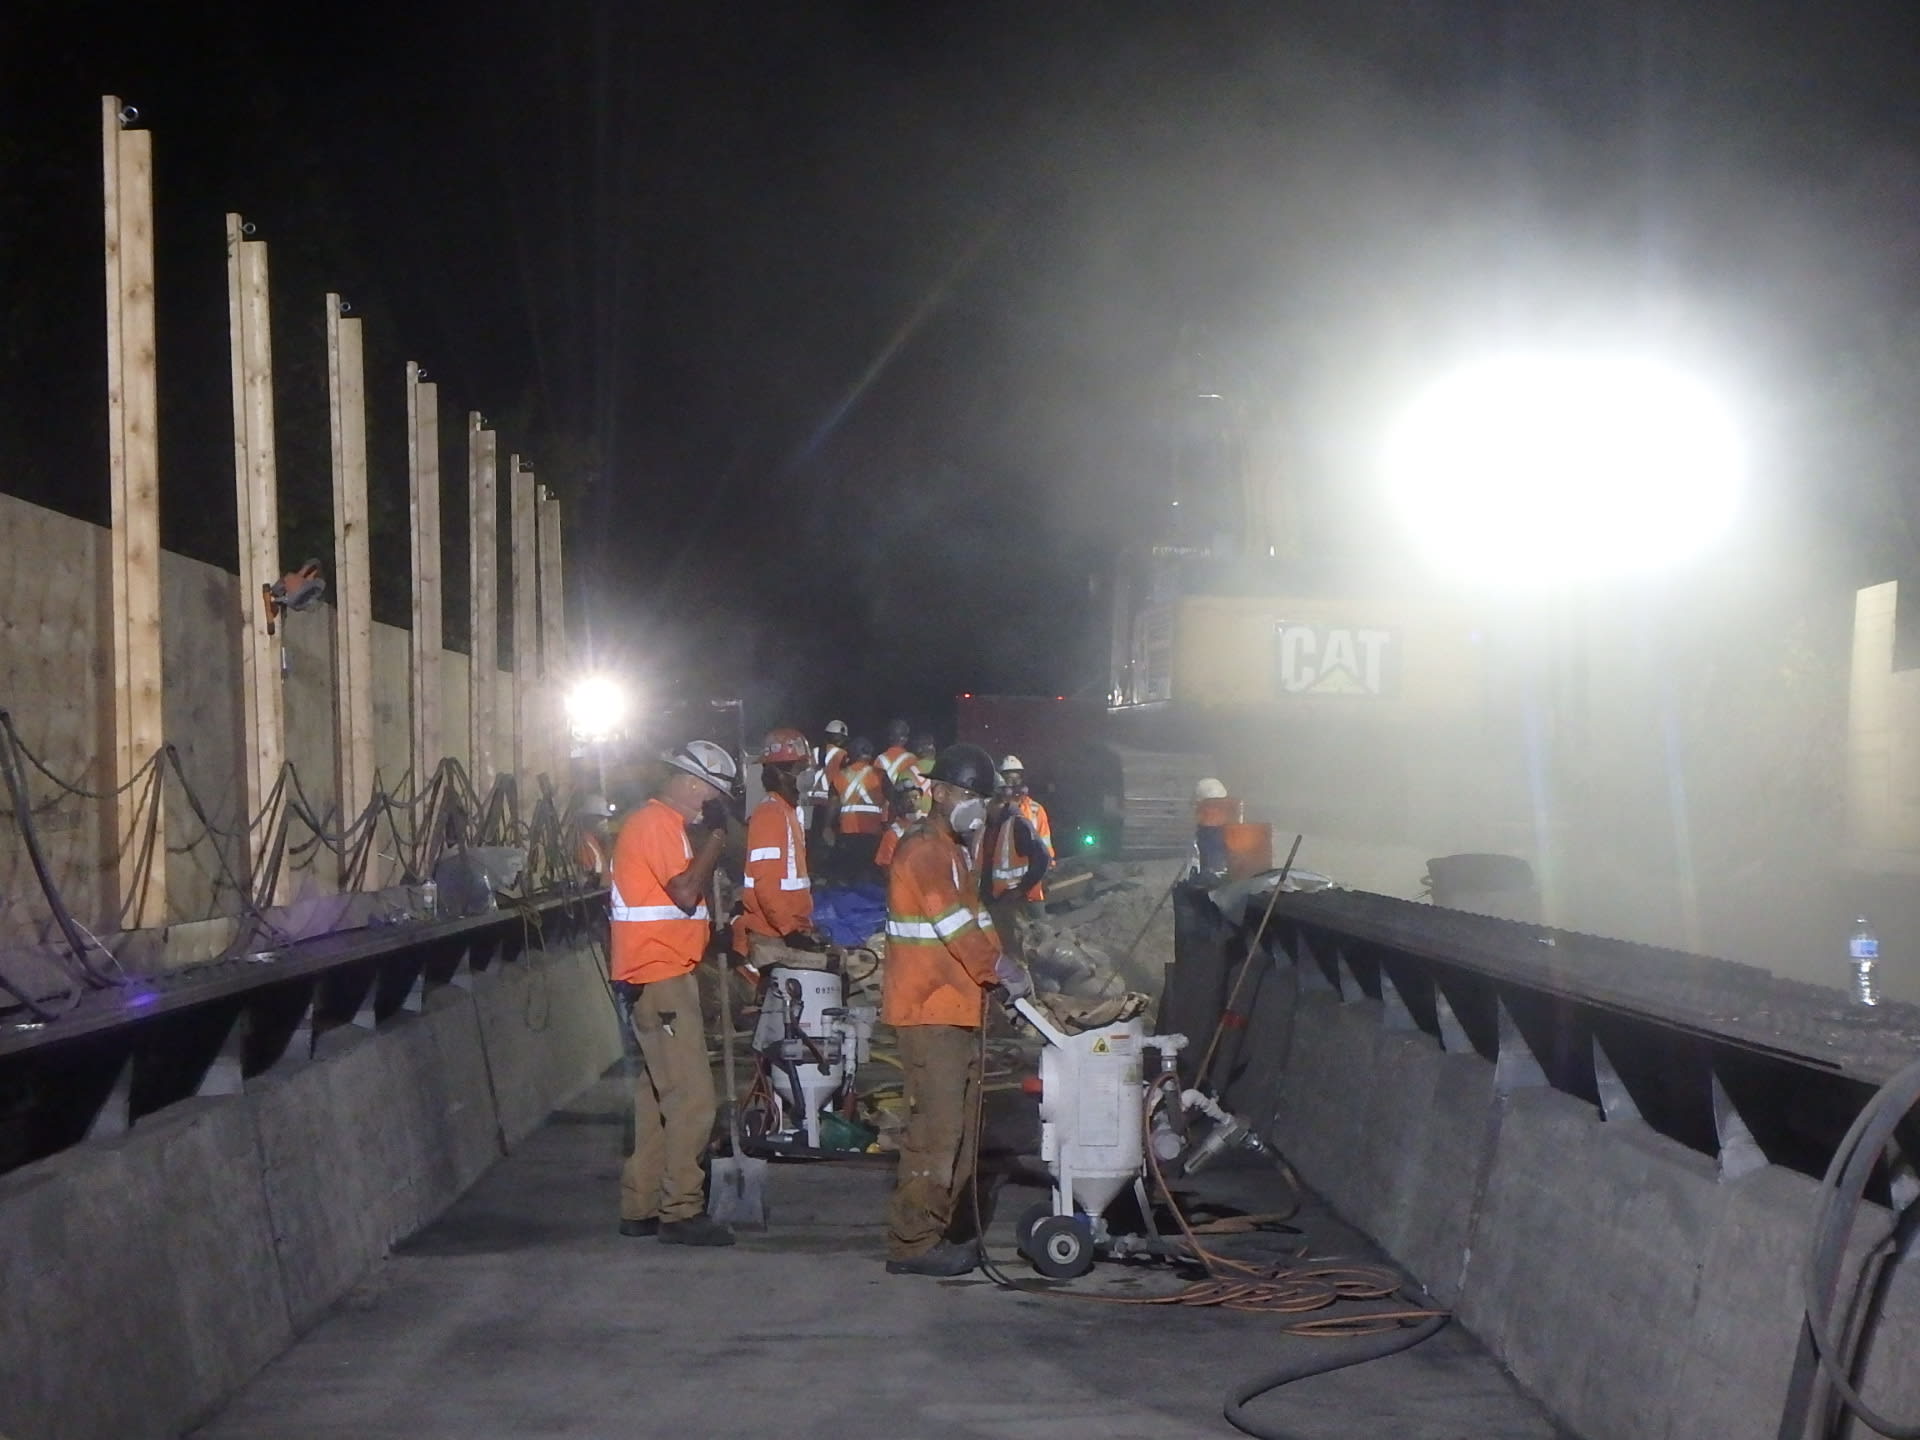 A night shot shows workmen sand blasting concrete on a bridge.